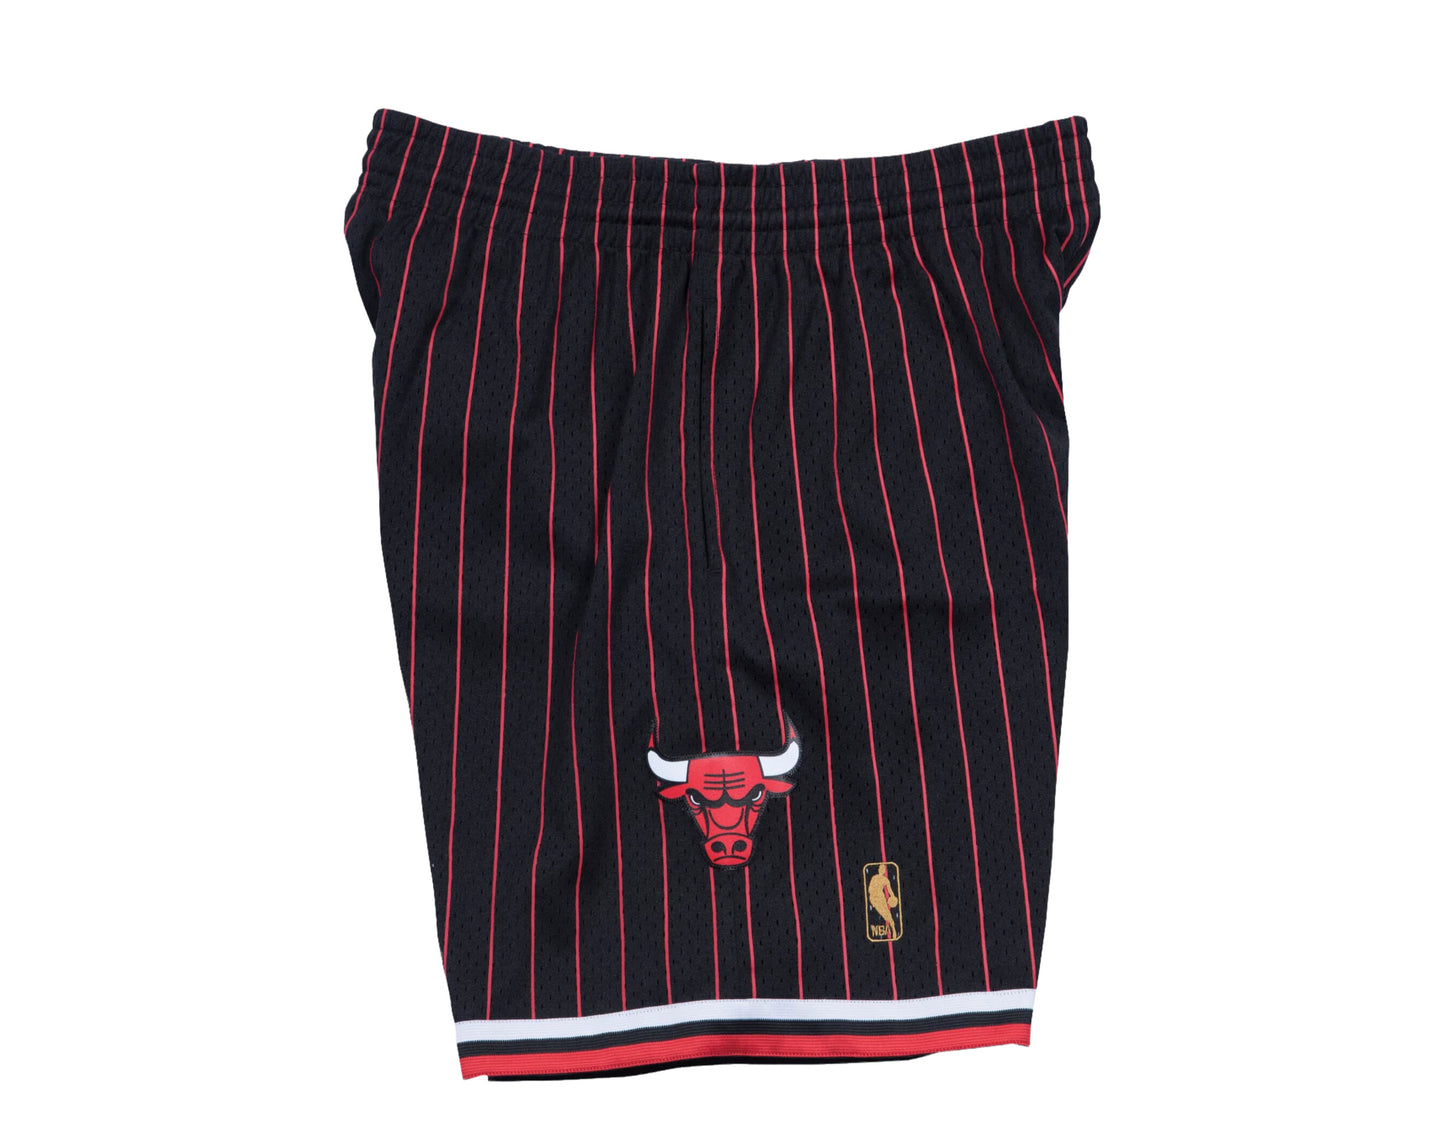 Mitchell & Ness NBA Swingman Chicago Bulls Alternate 1996-97 Men's Shorts